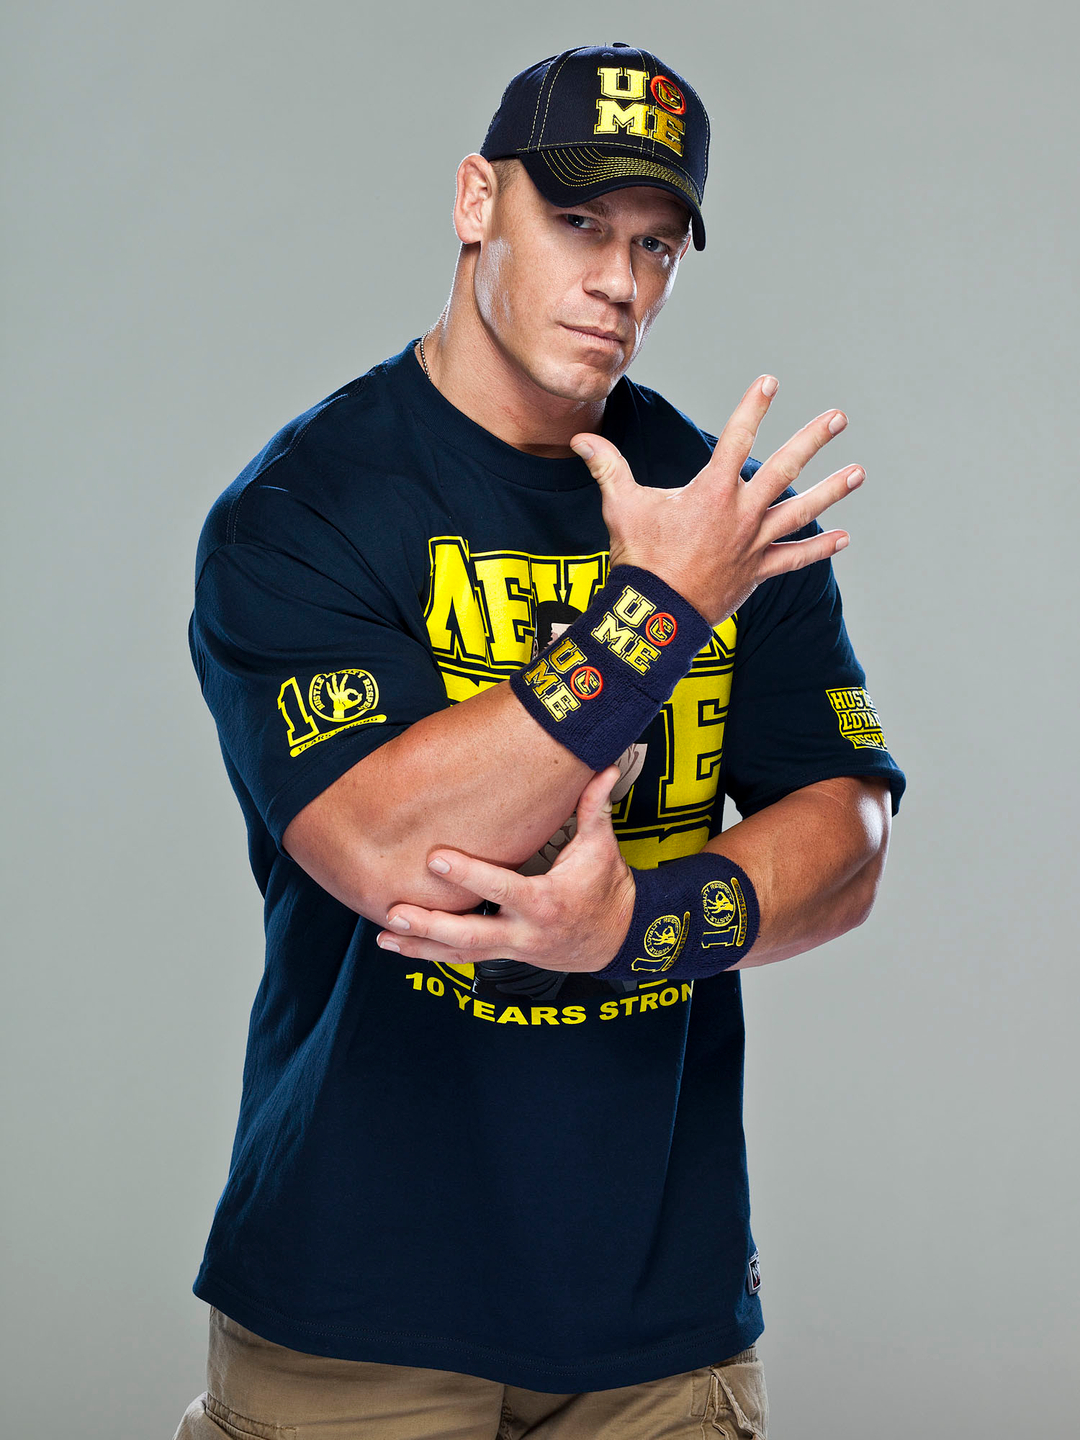 John Cena current look